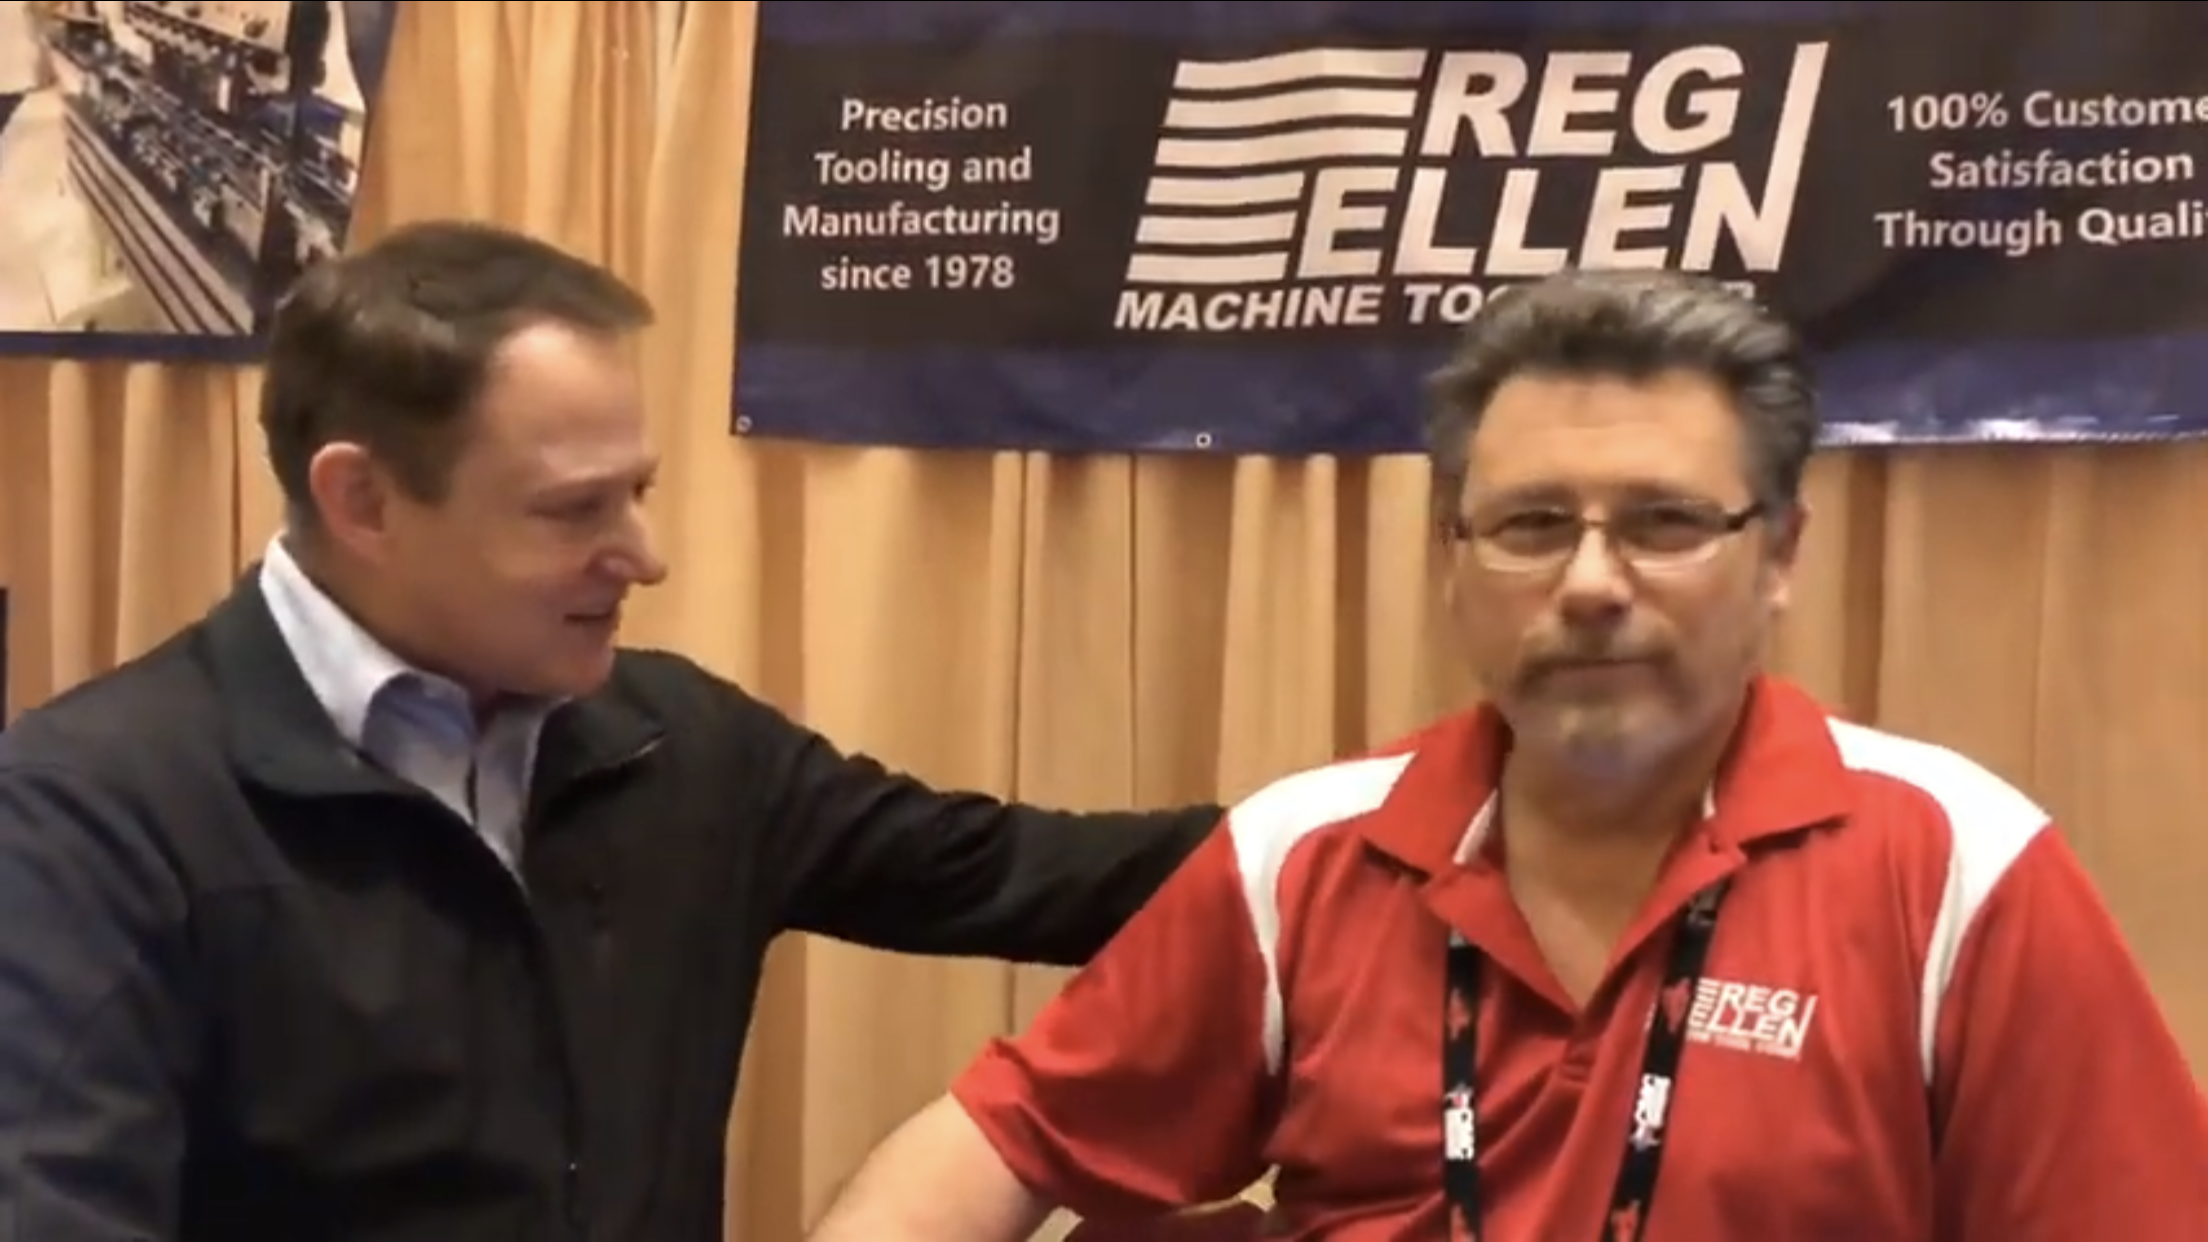 Reg Ellen Machine Tool - Laser Marking Technologies